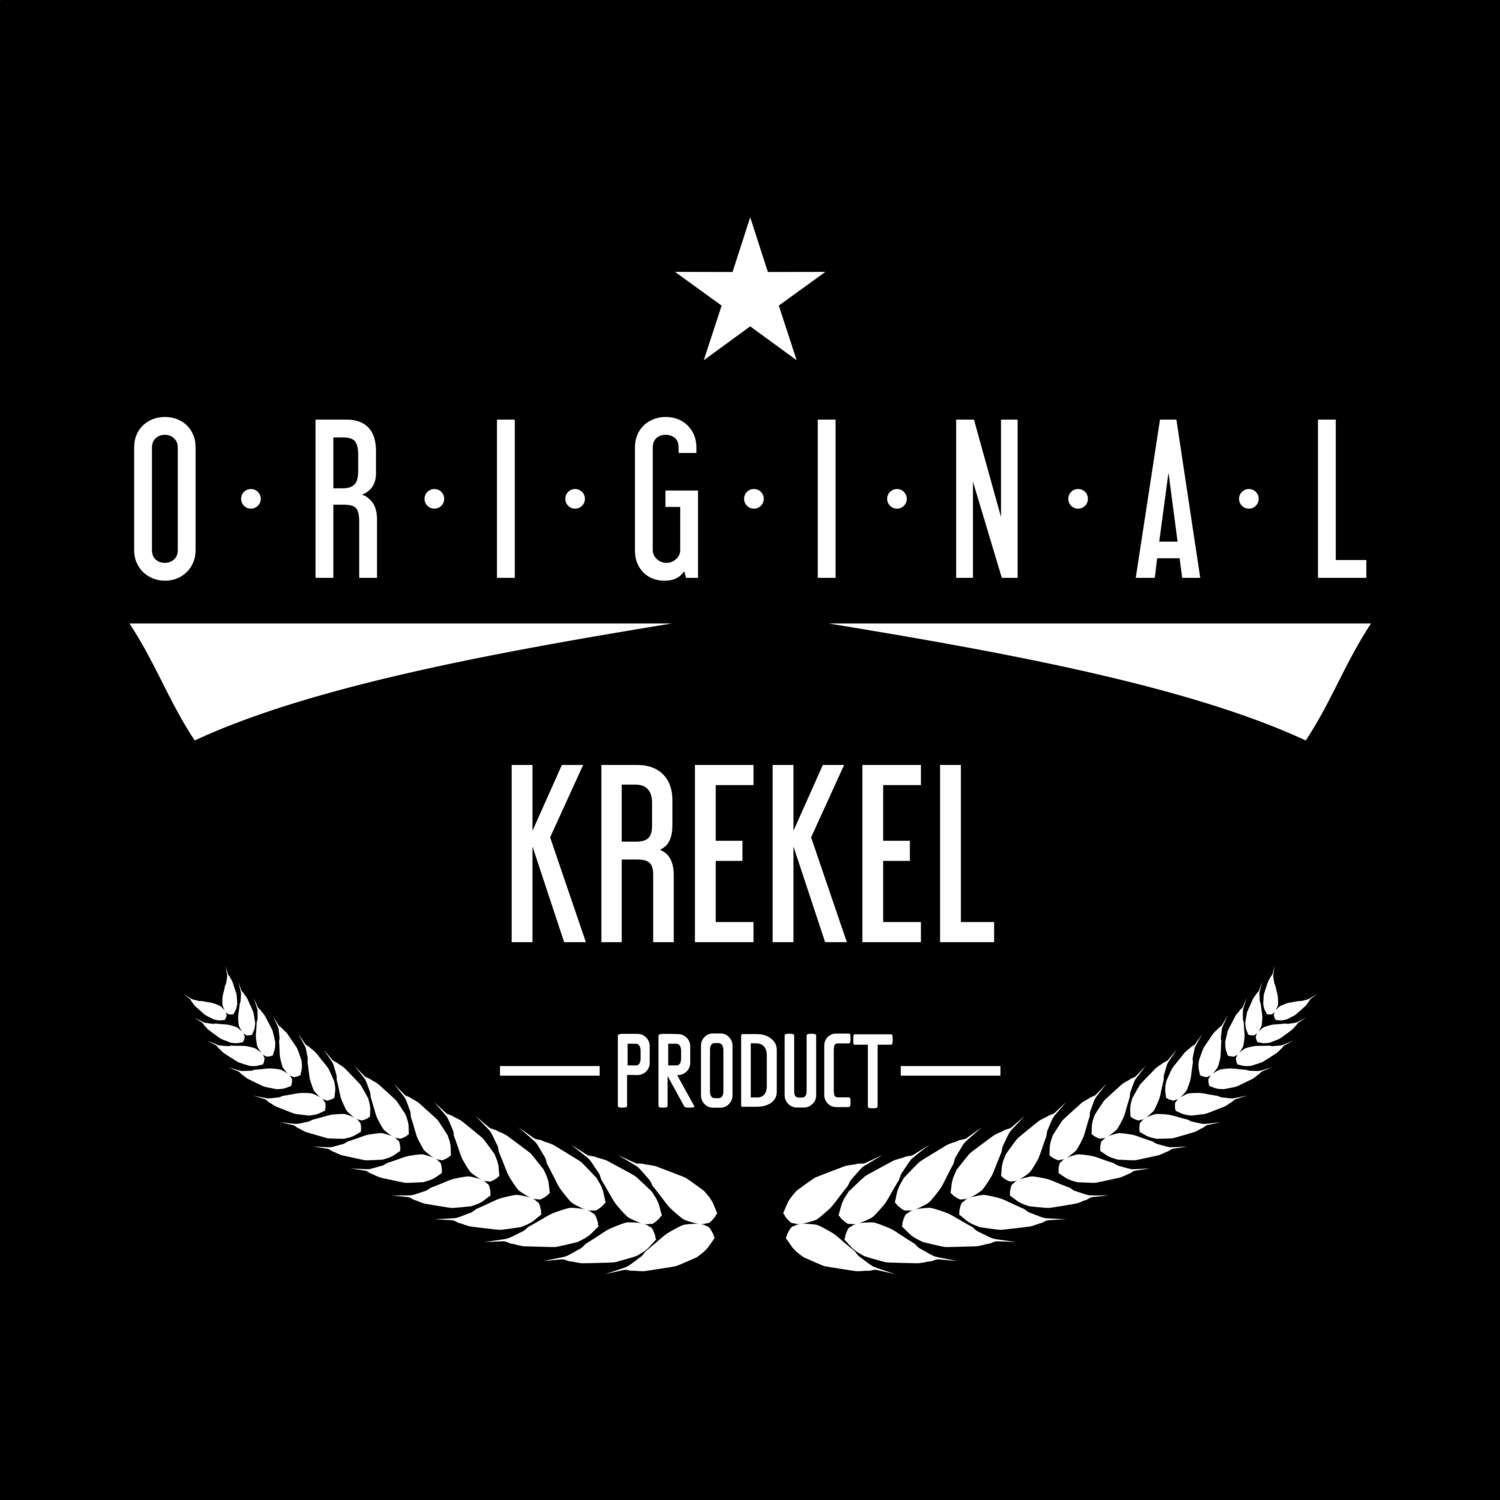 Krekel T-Shirt »Original Product«